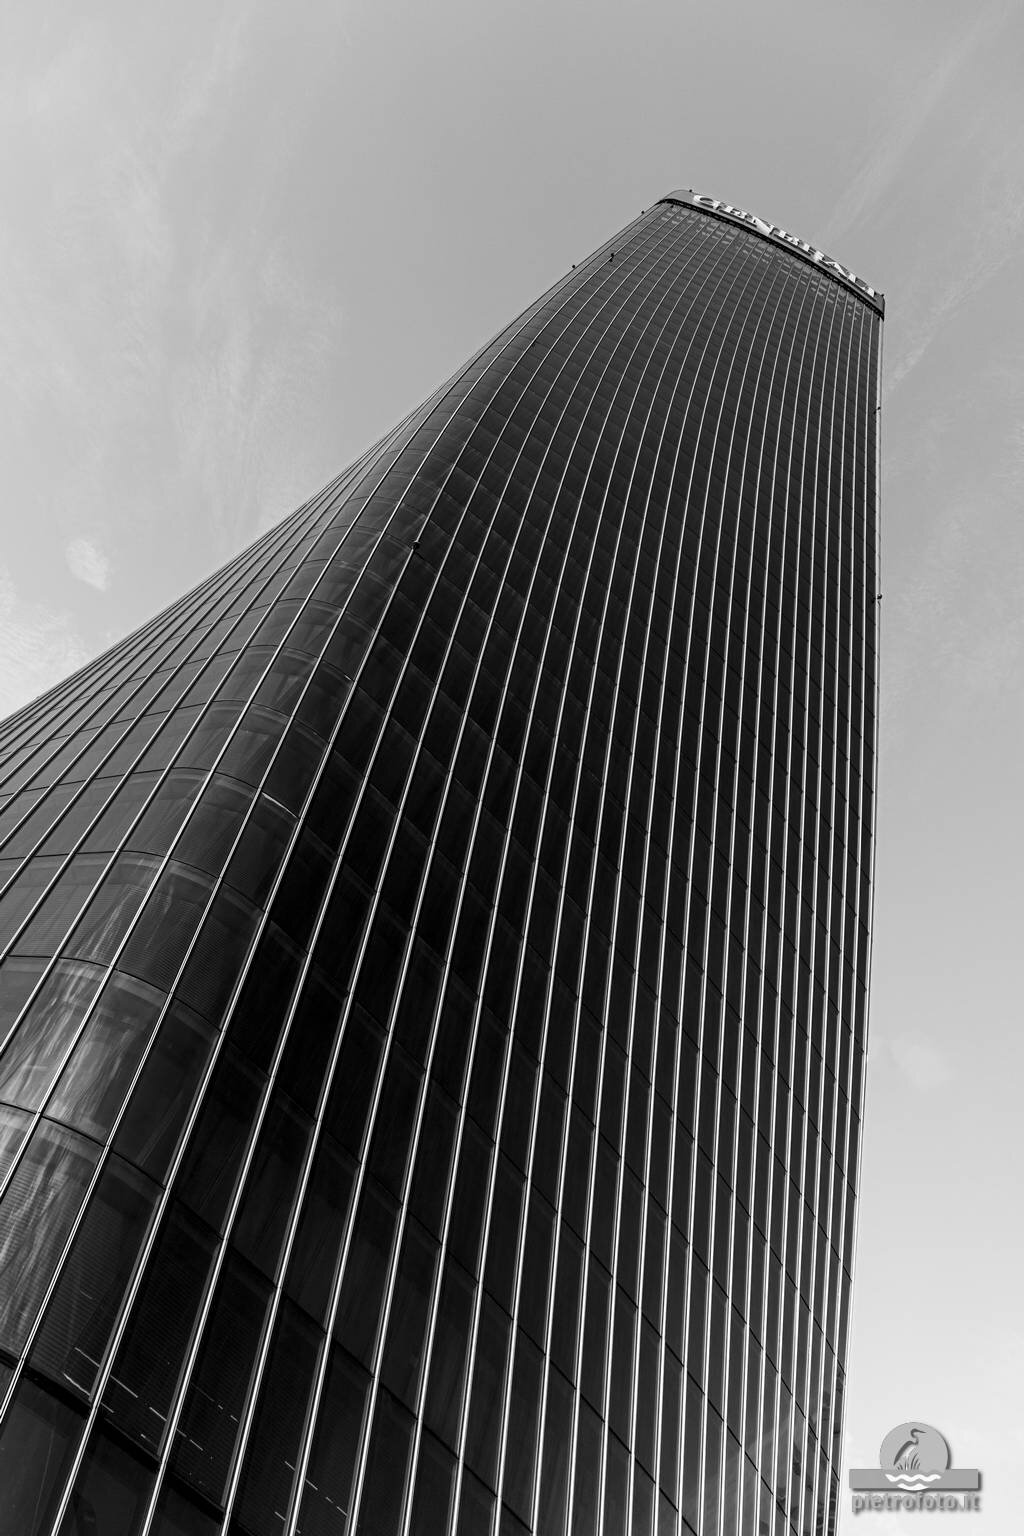 the hadid torque skyscraper